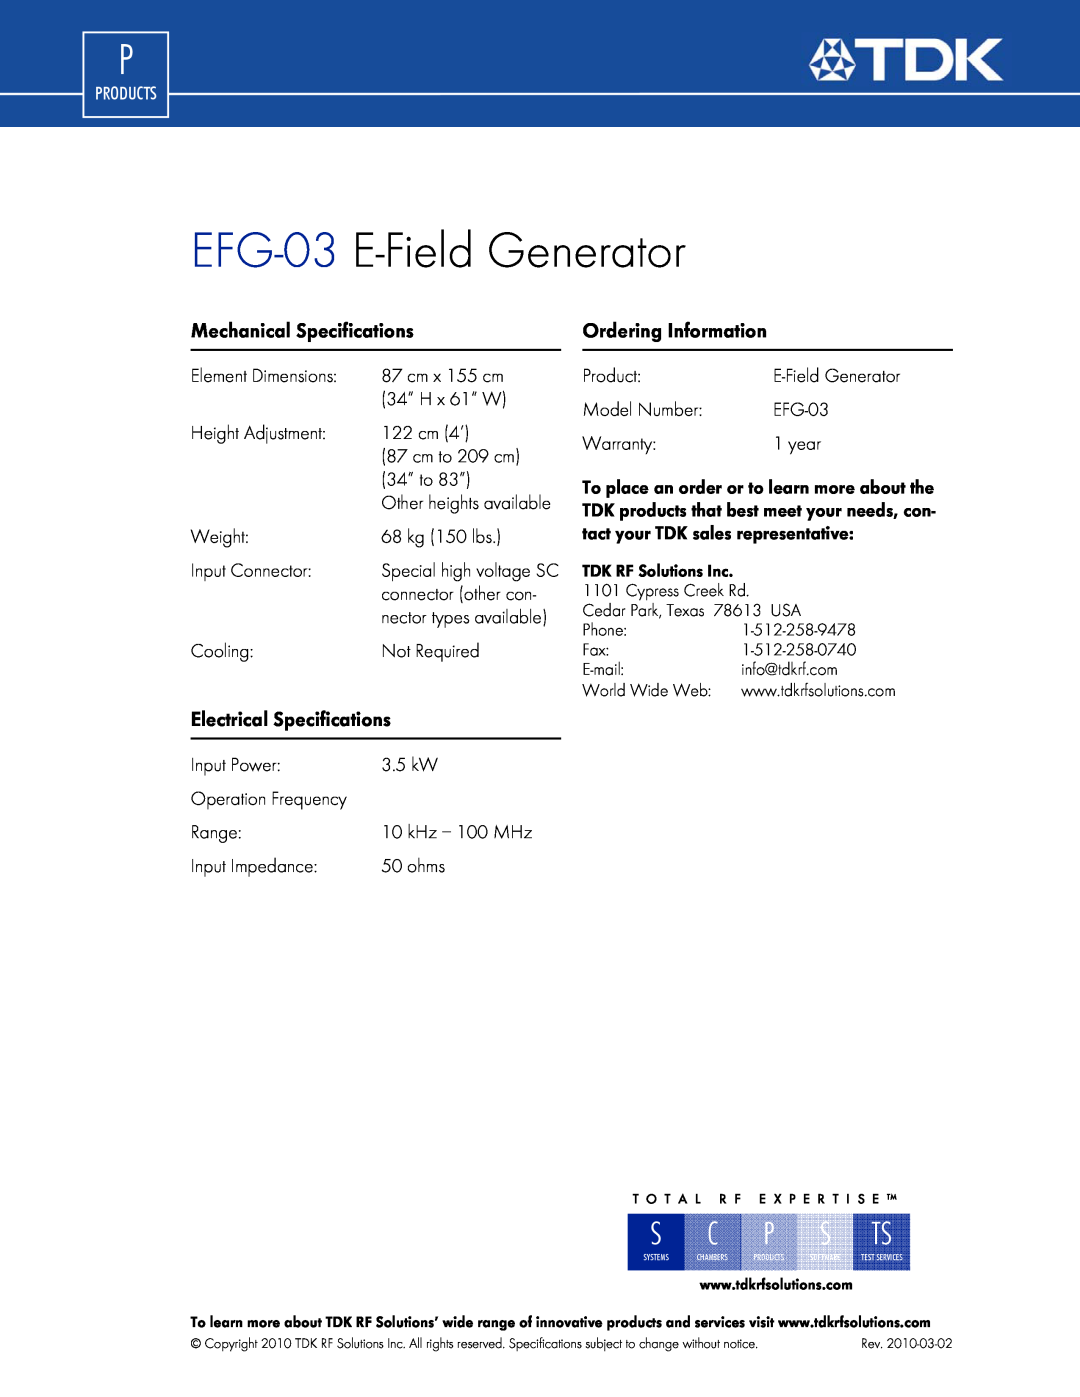 TDK manual Mechanical Specifications, Ordering Information, Electrical Specifications, EFG-03 E-FieldGenerator 